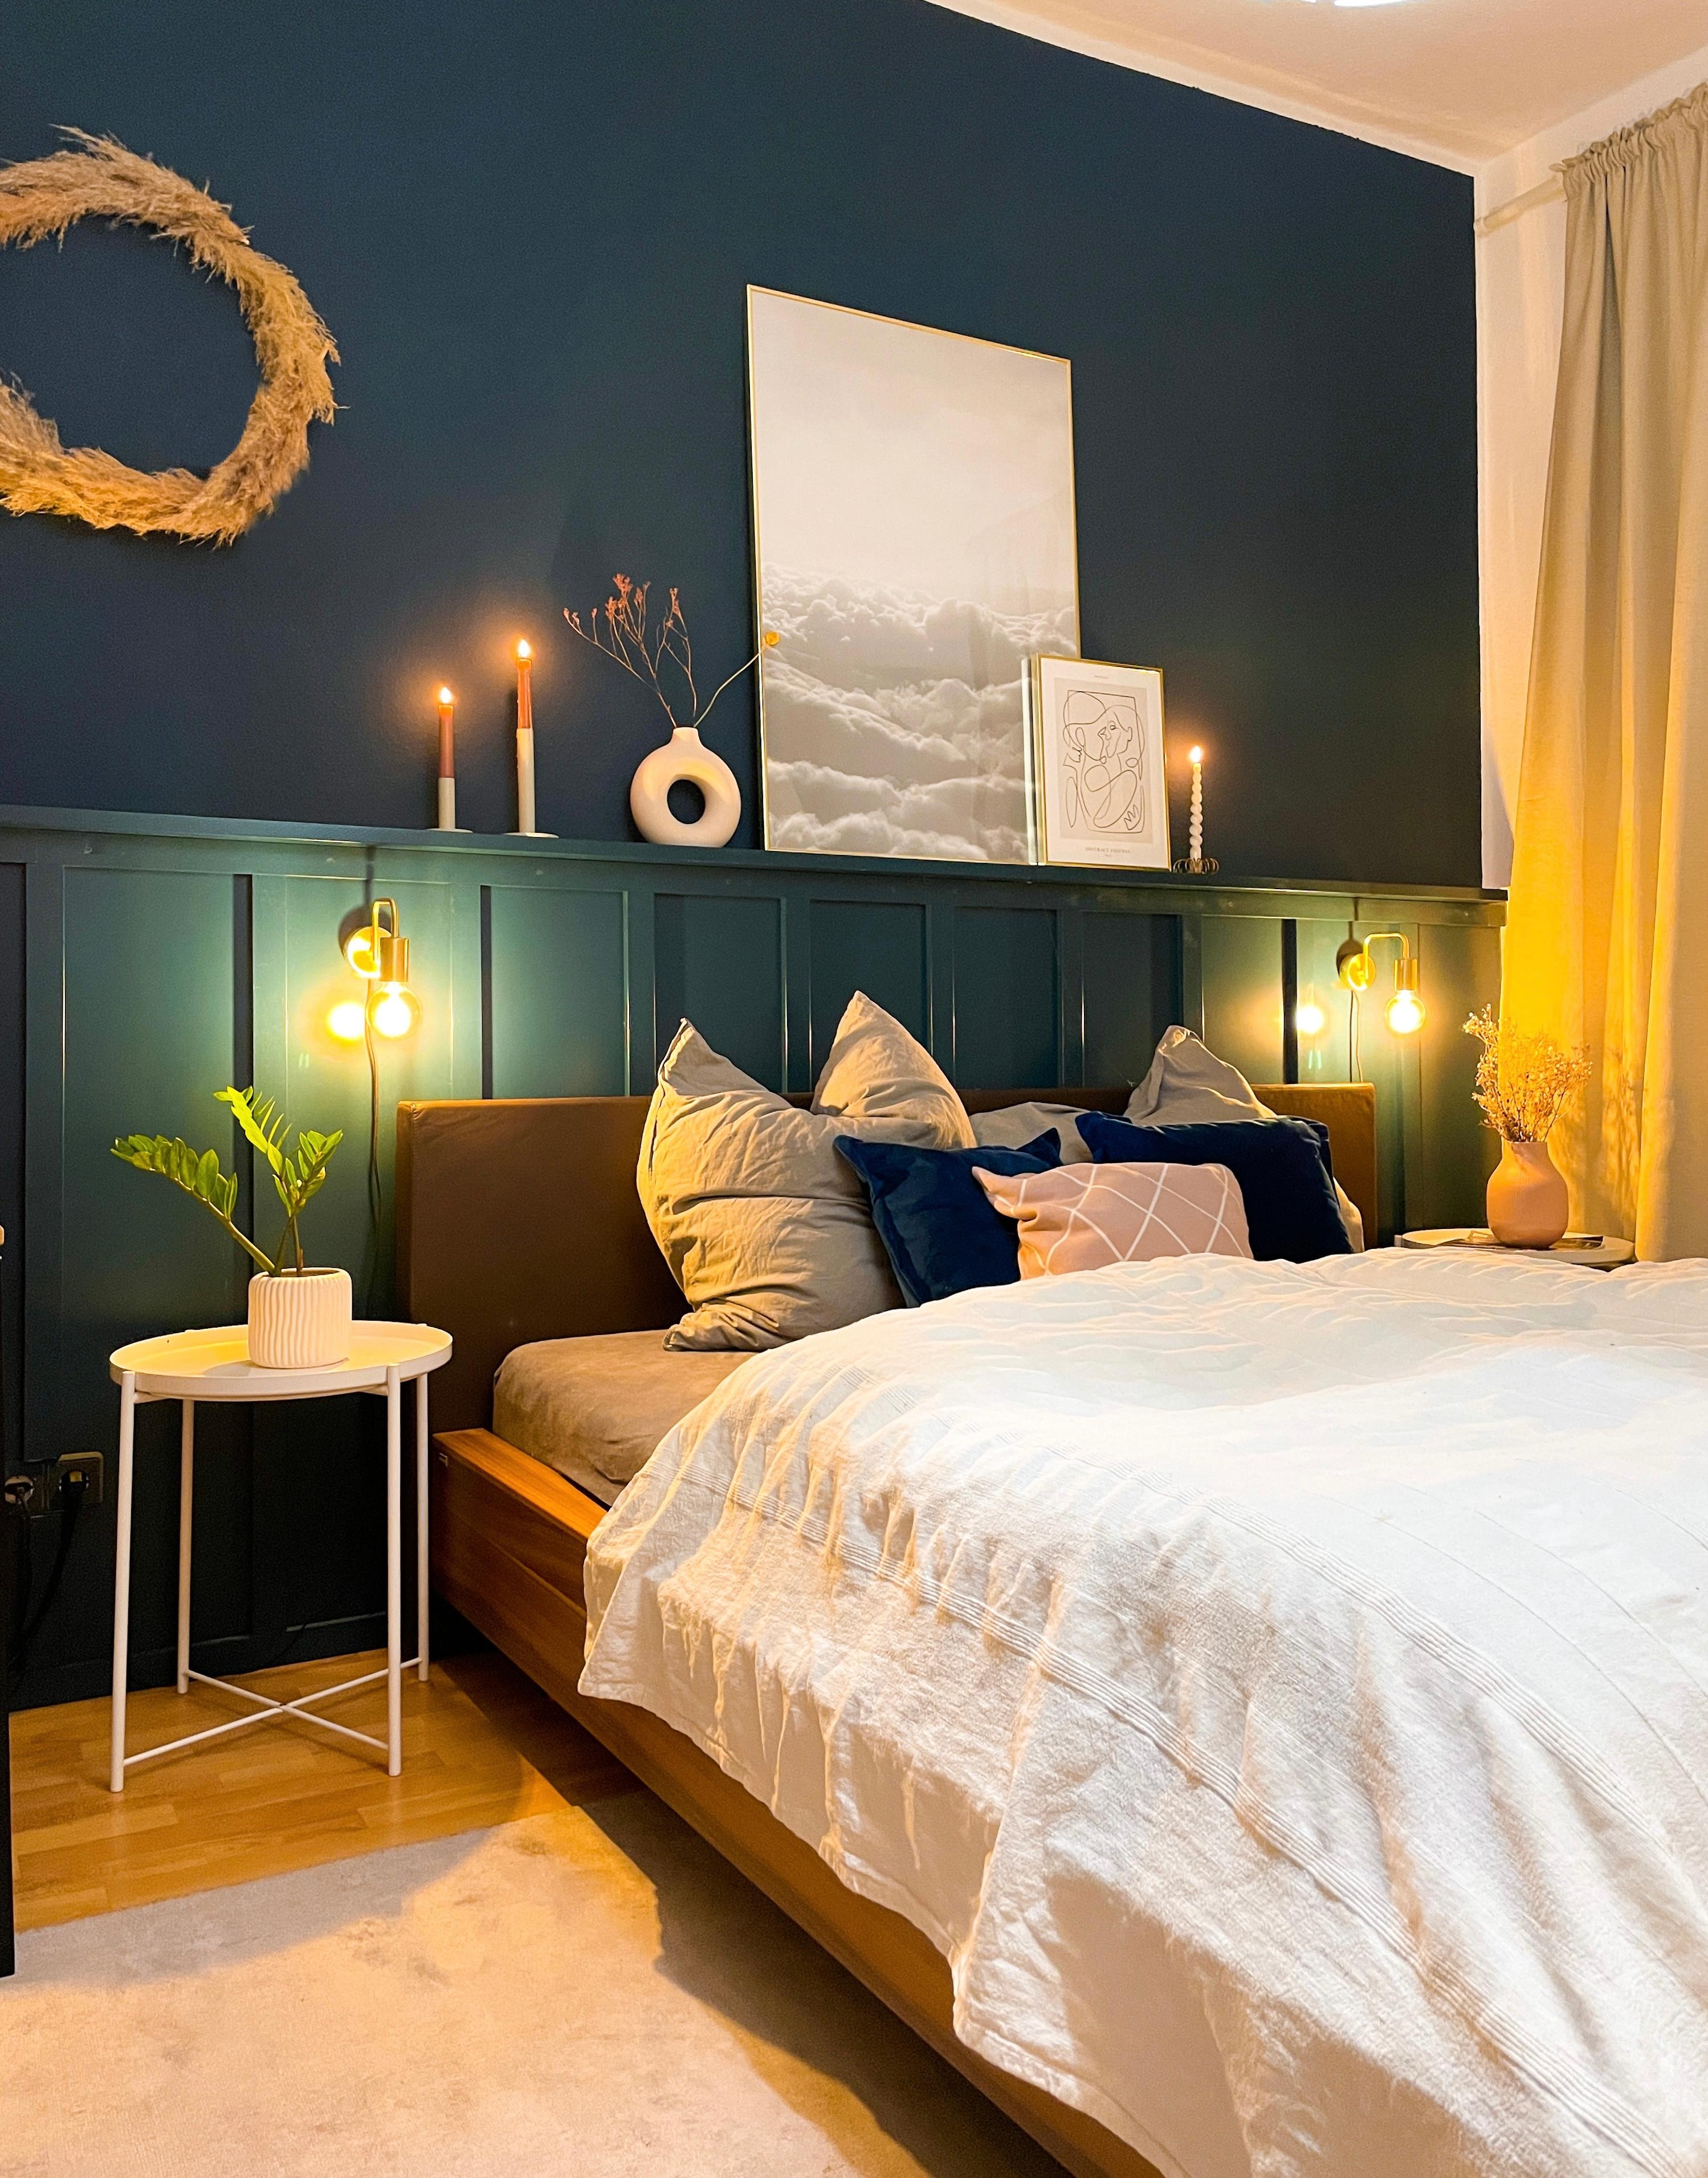 #bedroom #diy #blueberry #wandfarbe #panelling #cozy #kerzen #candles